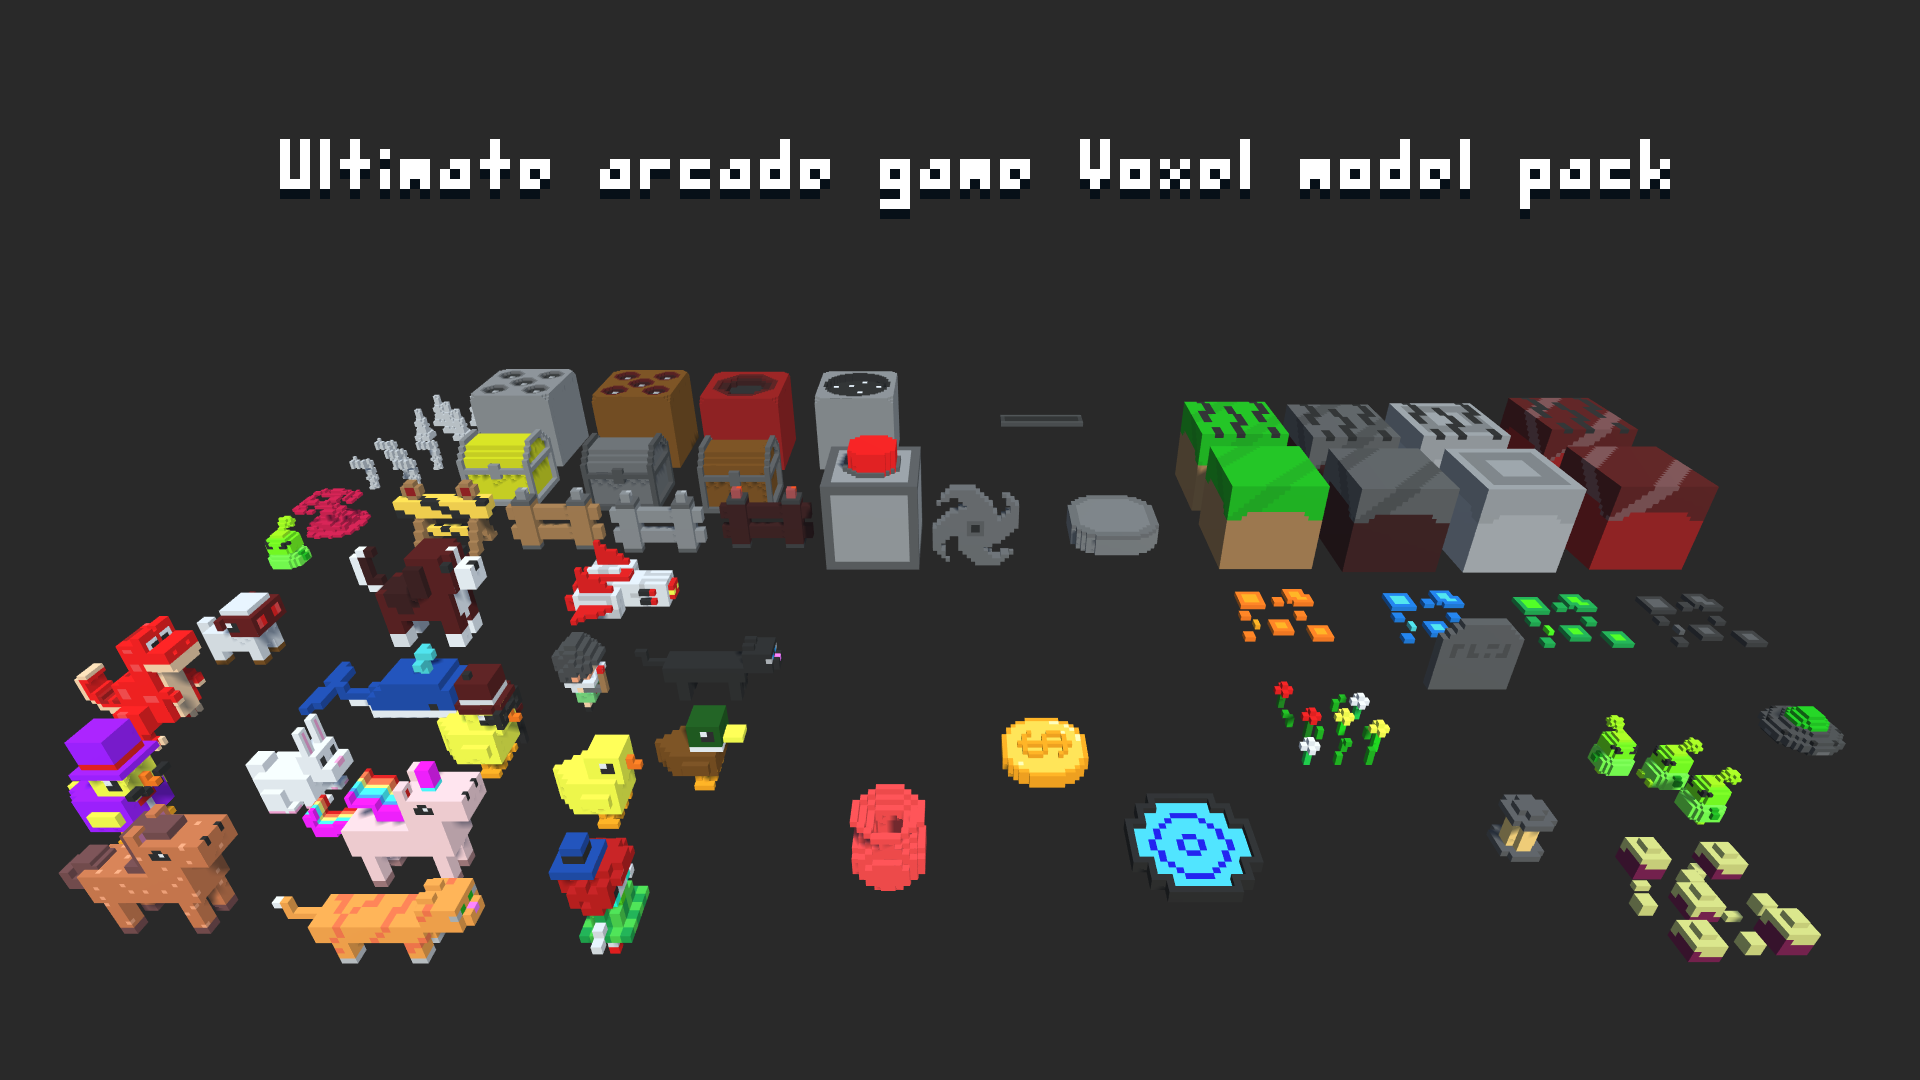 Ultimate arcade game Voxel model pack